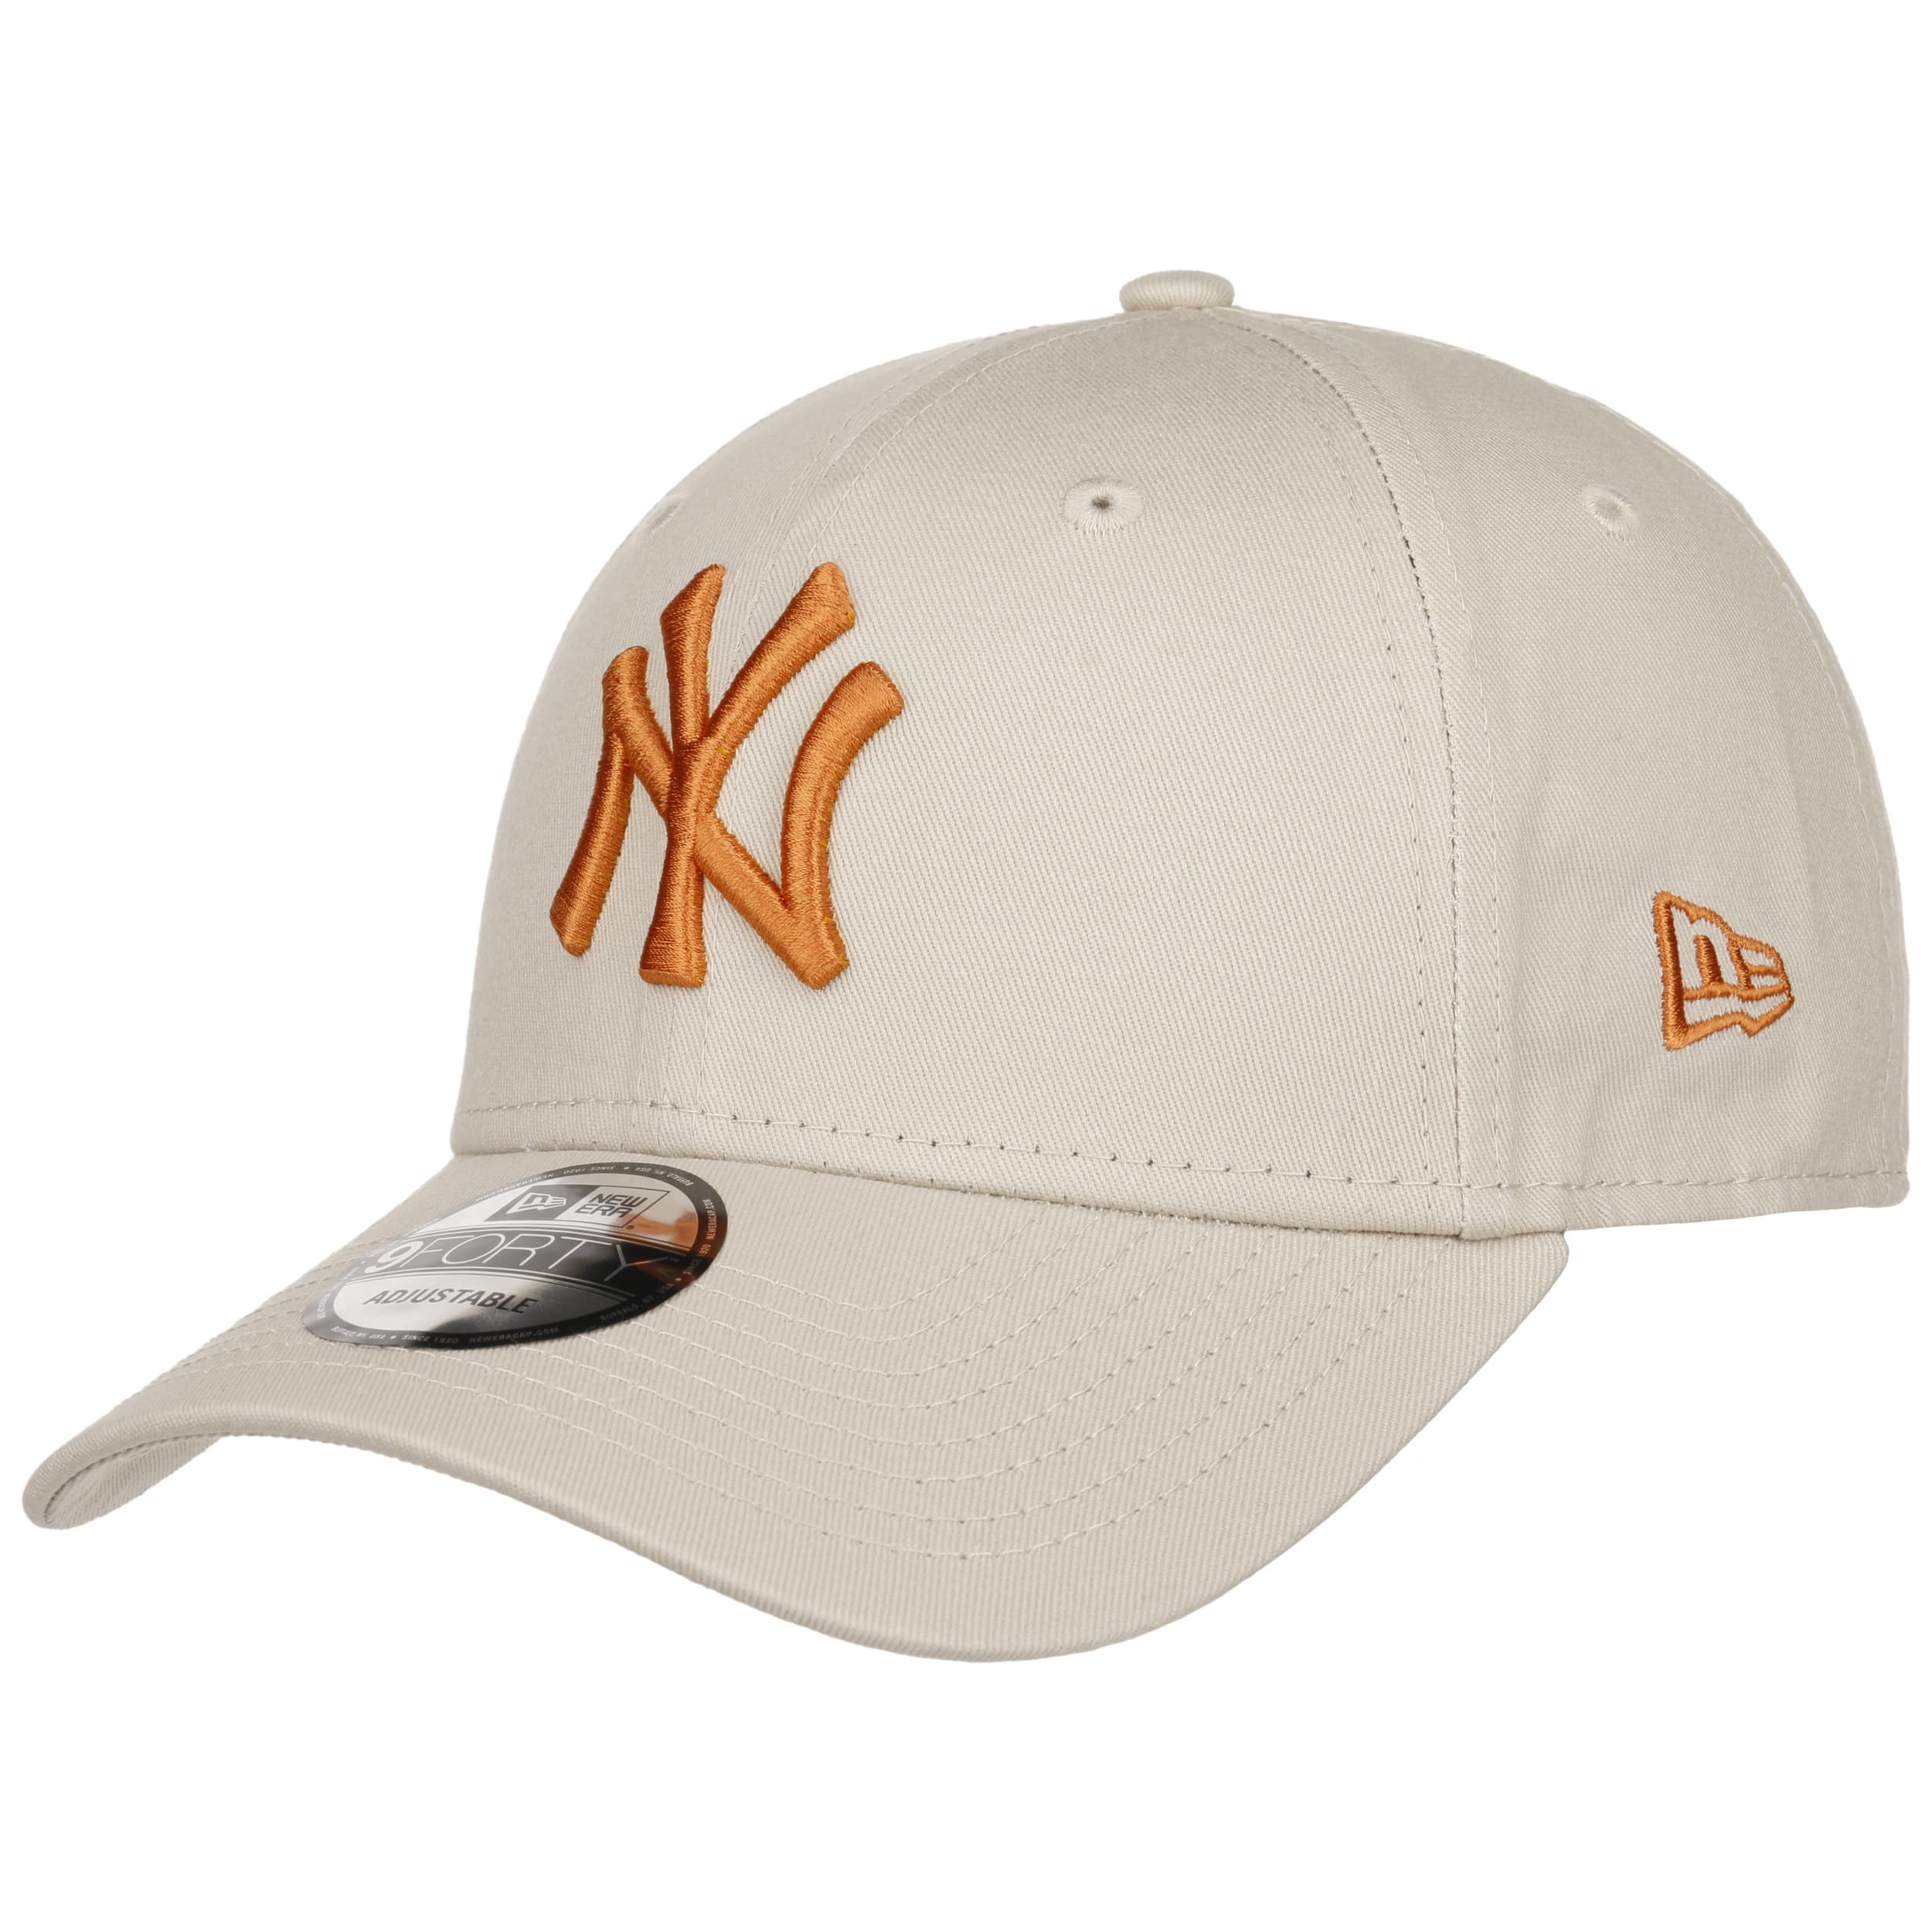 aksesoris others hats Major League Baseball Mlb bucket hat beige